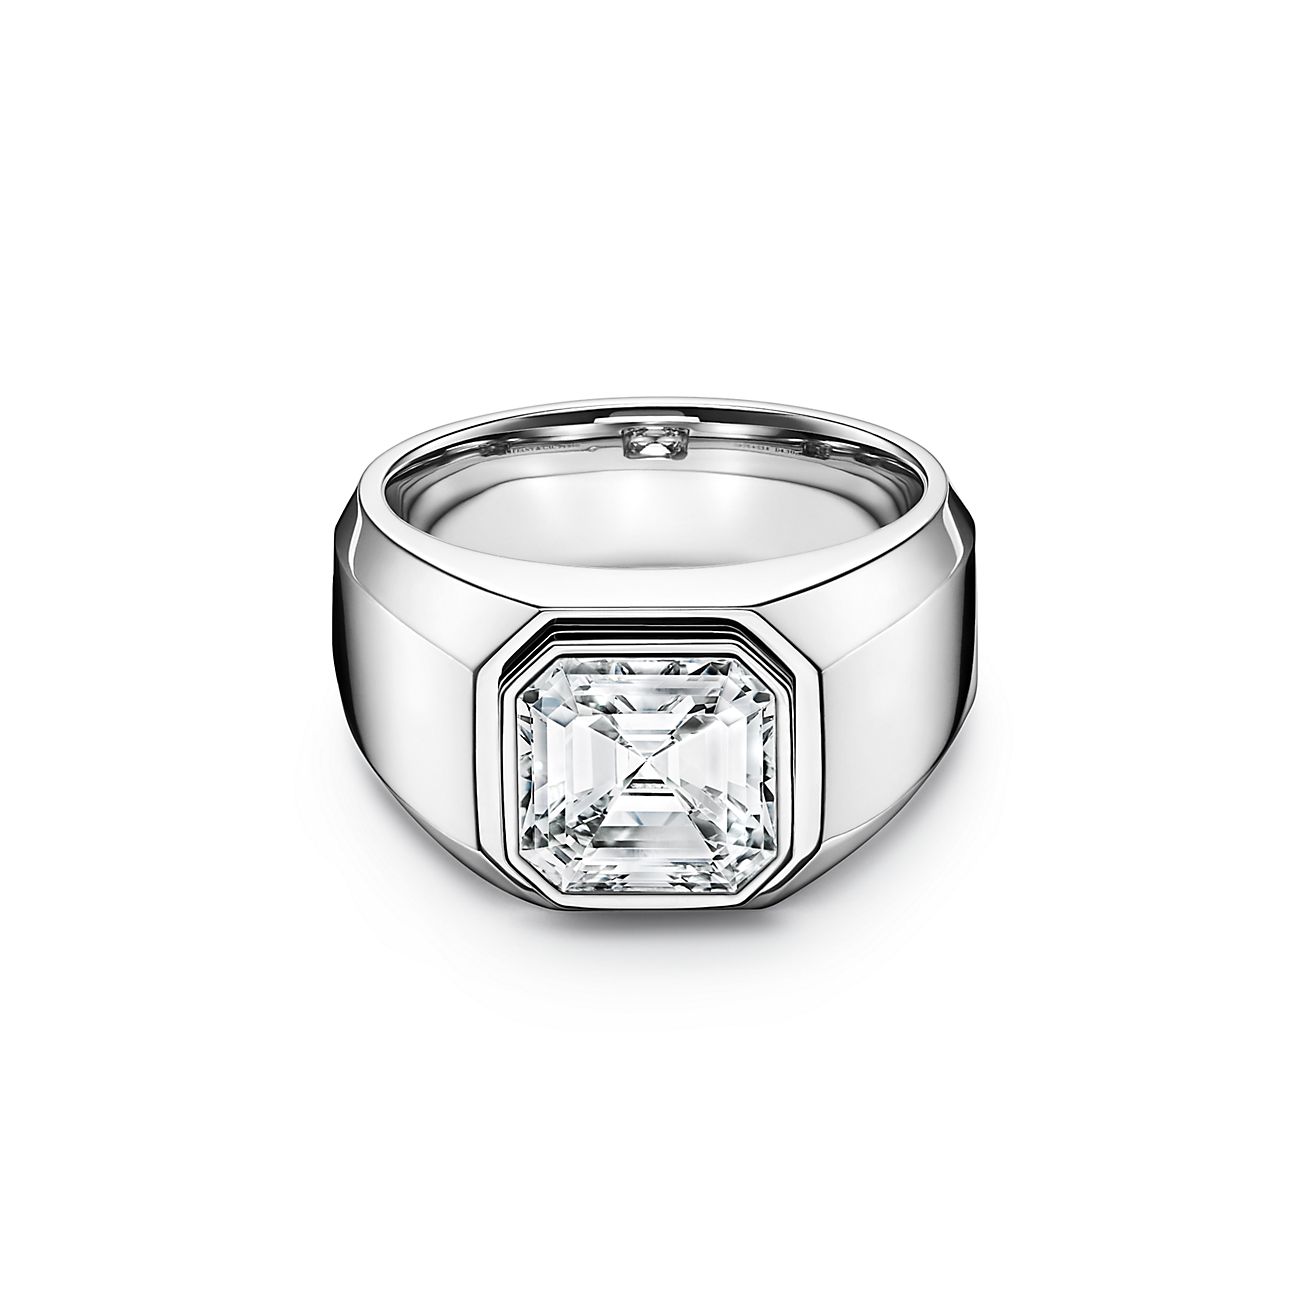 Authentic Tiffany & Co Sterling Silver Mens Ring 1997 Size 8 Tiffany 1837  Unisex Ring Heavy 8.6 grams Tiffany Silver Band Ring Tiffany Mens